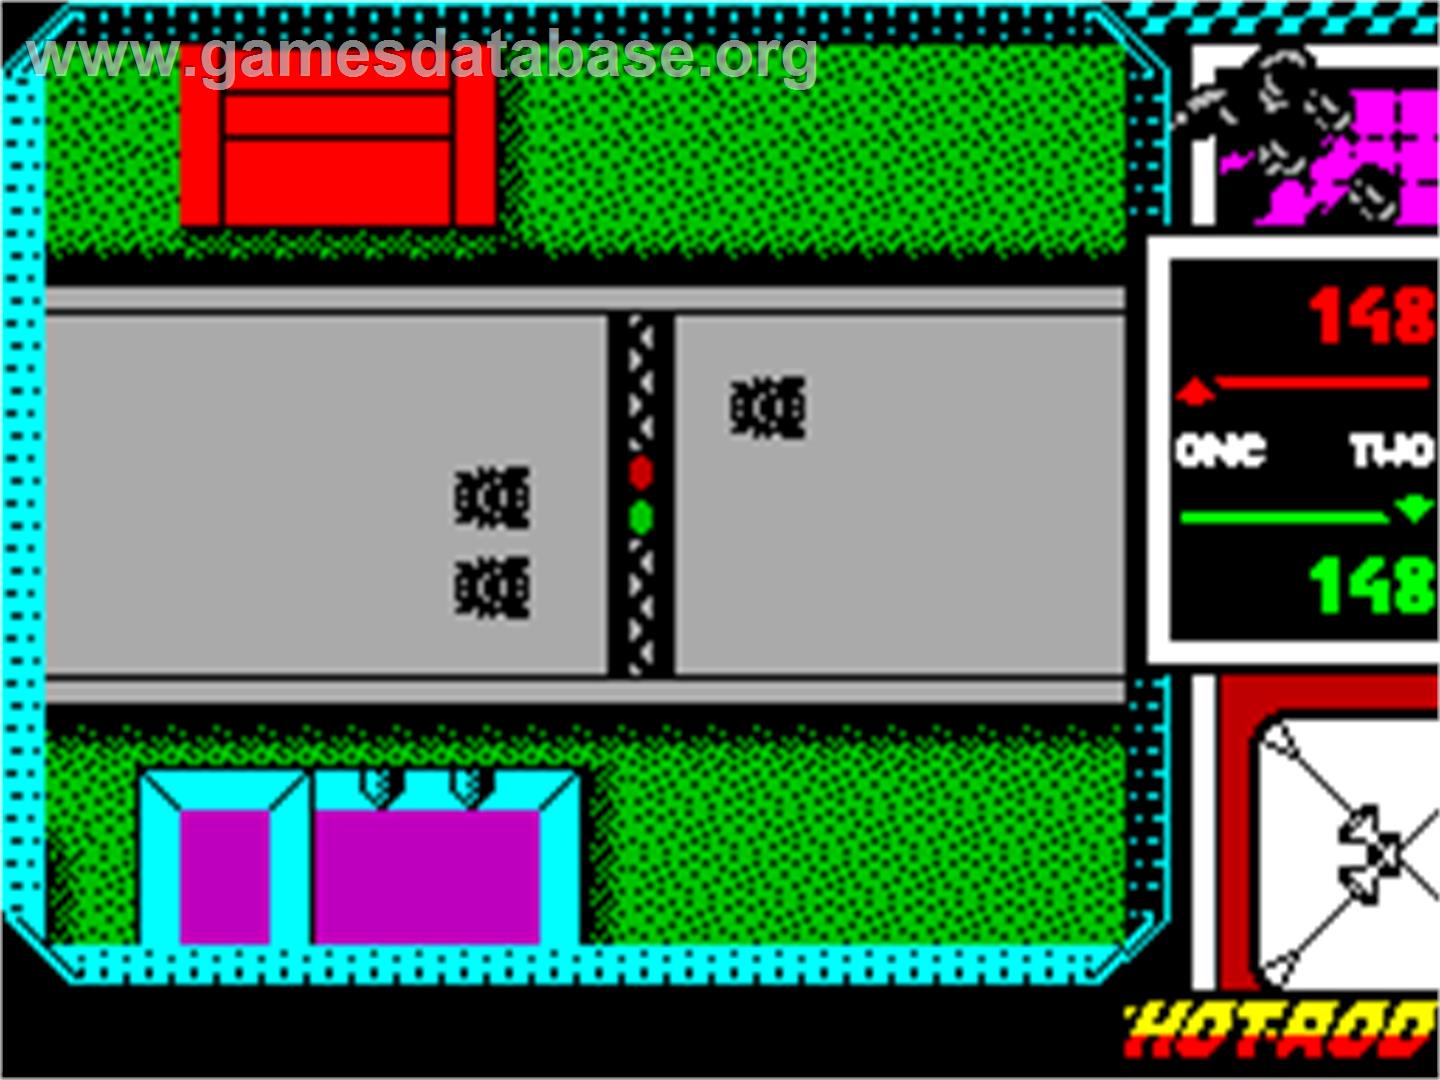 Hot Rod - Sinclair ZX Spectrum - Artwork - In Game